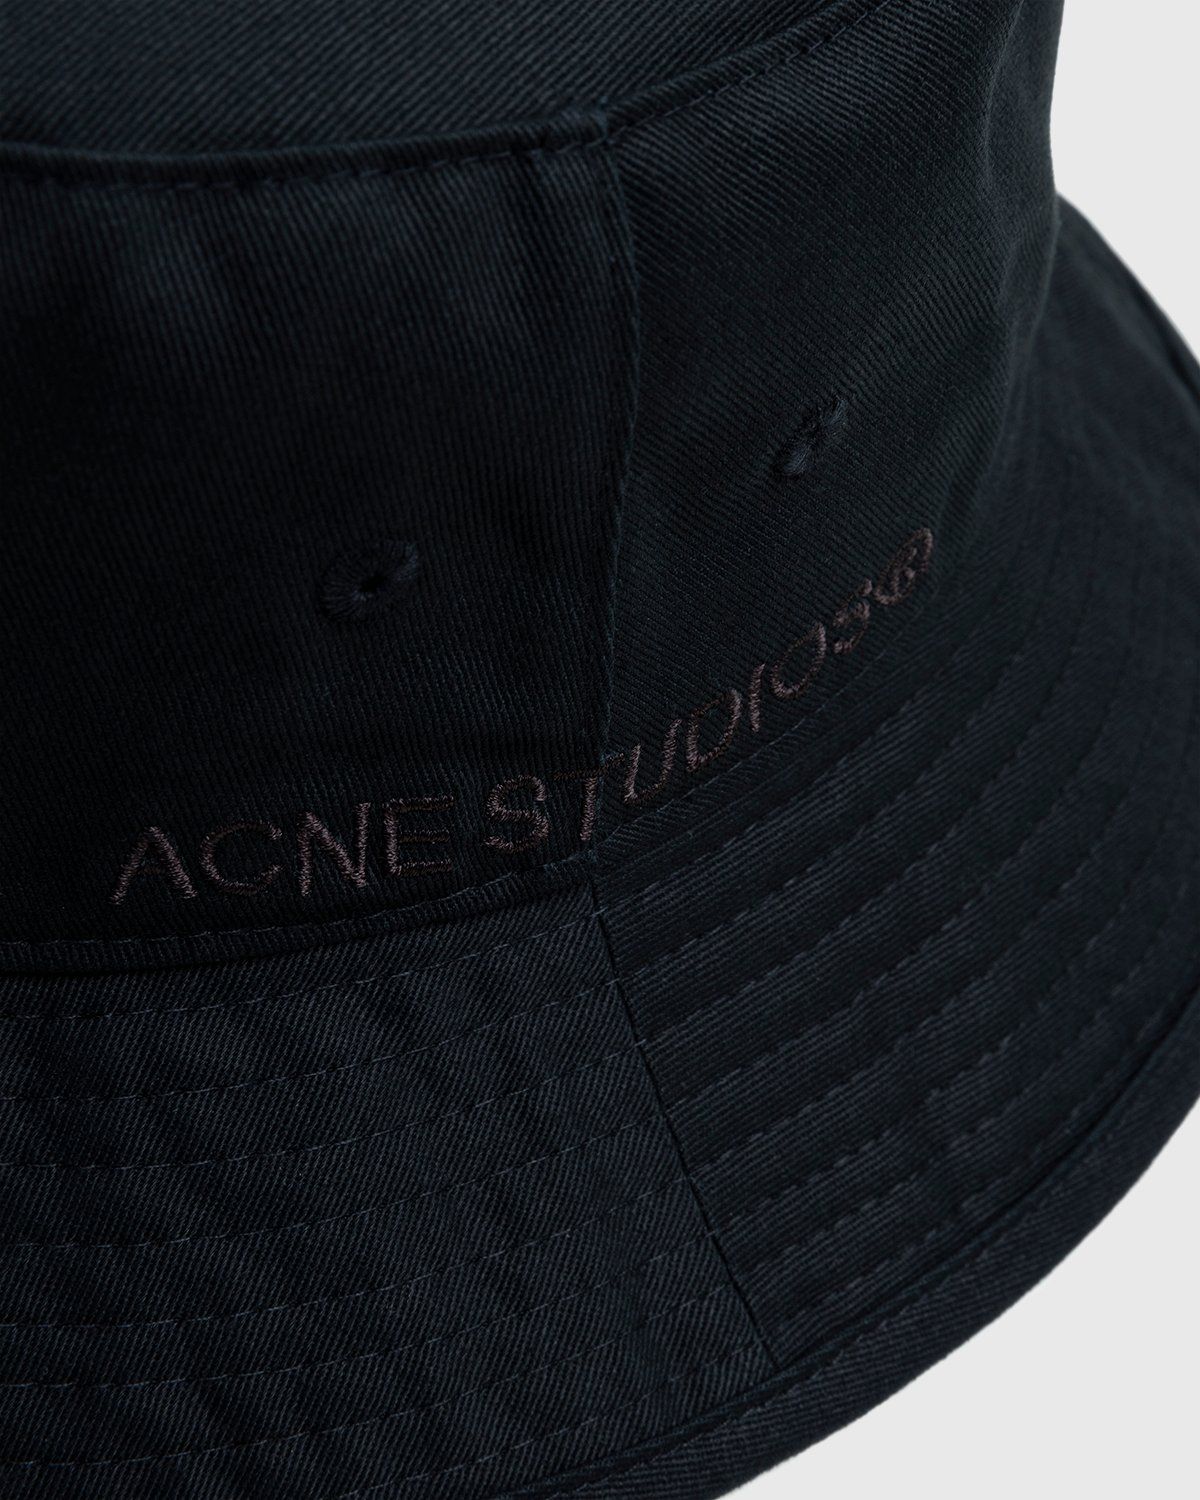 Acne Studios – Twill Bucket Hat Black - Image 3